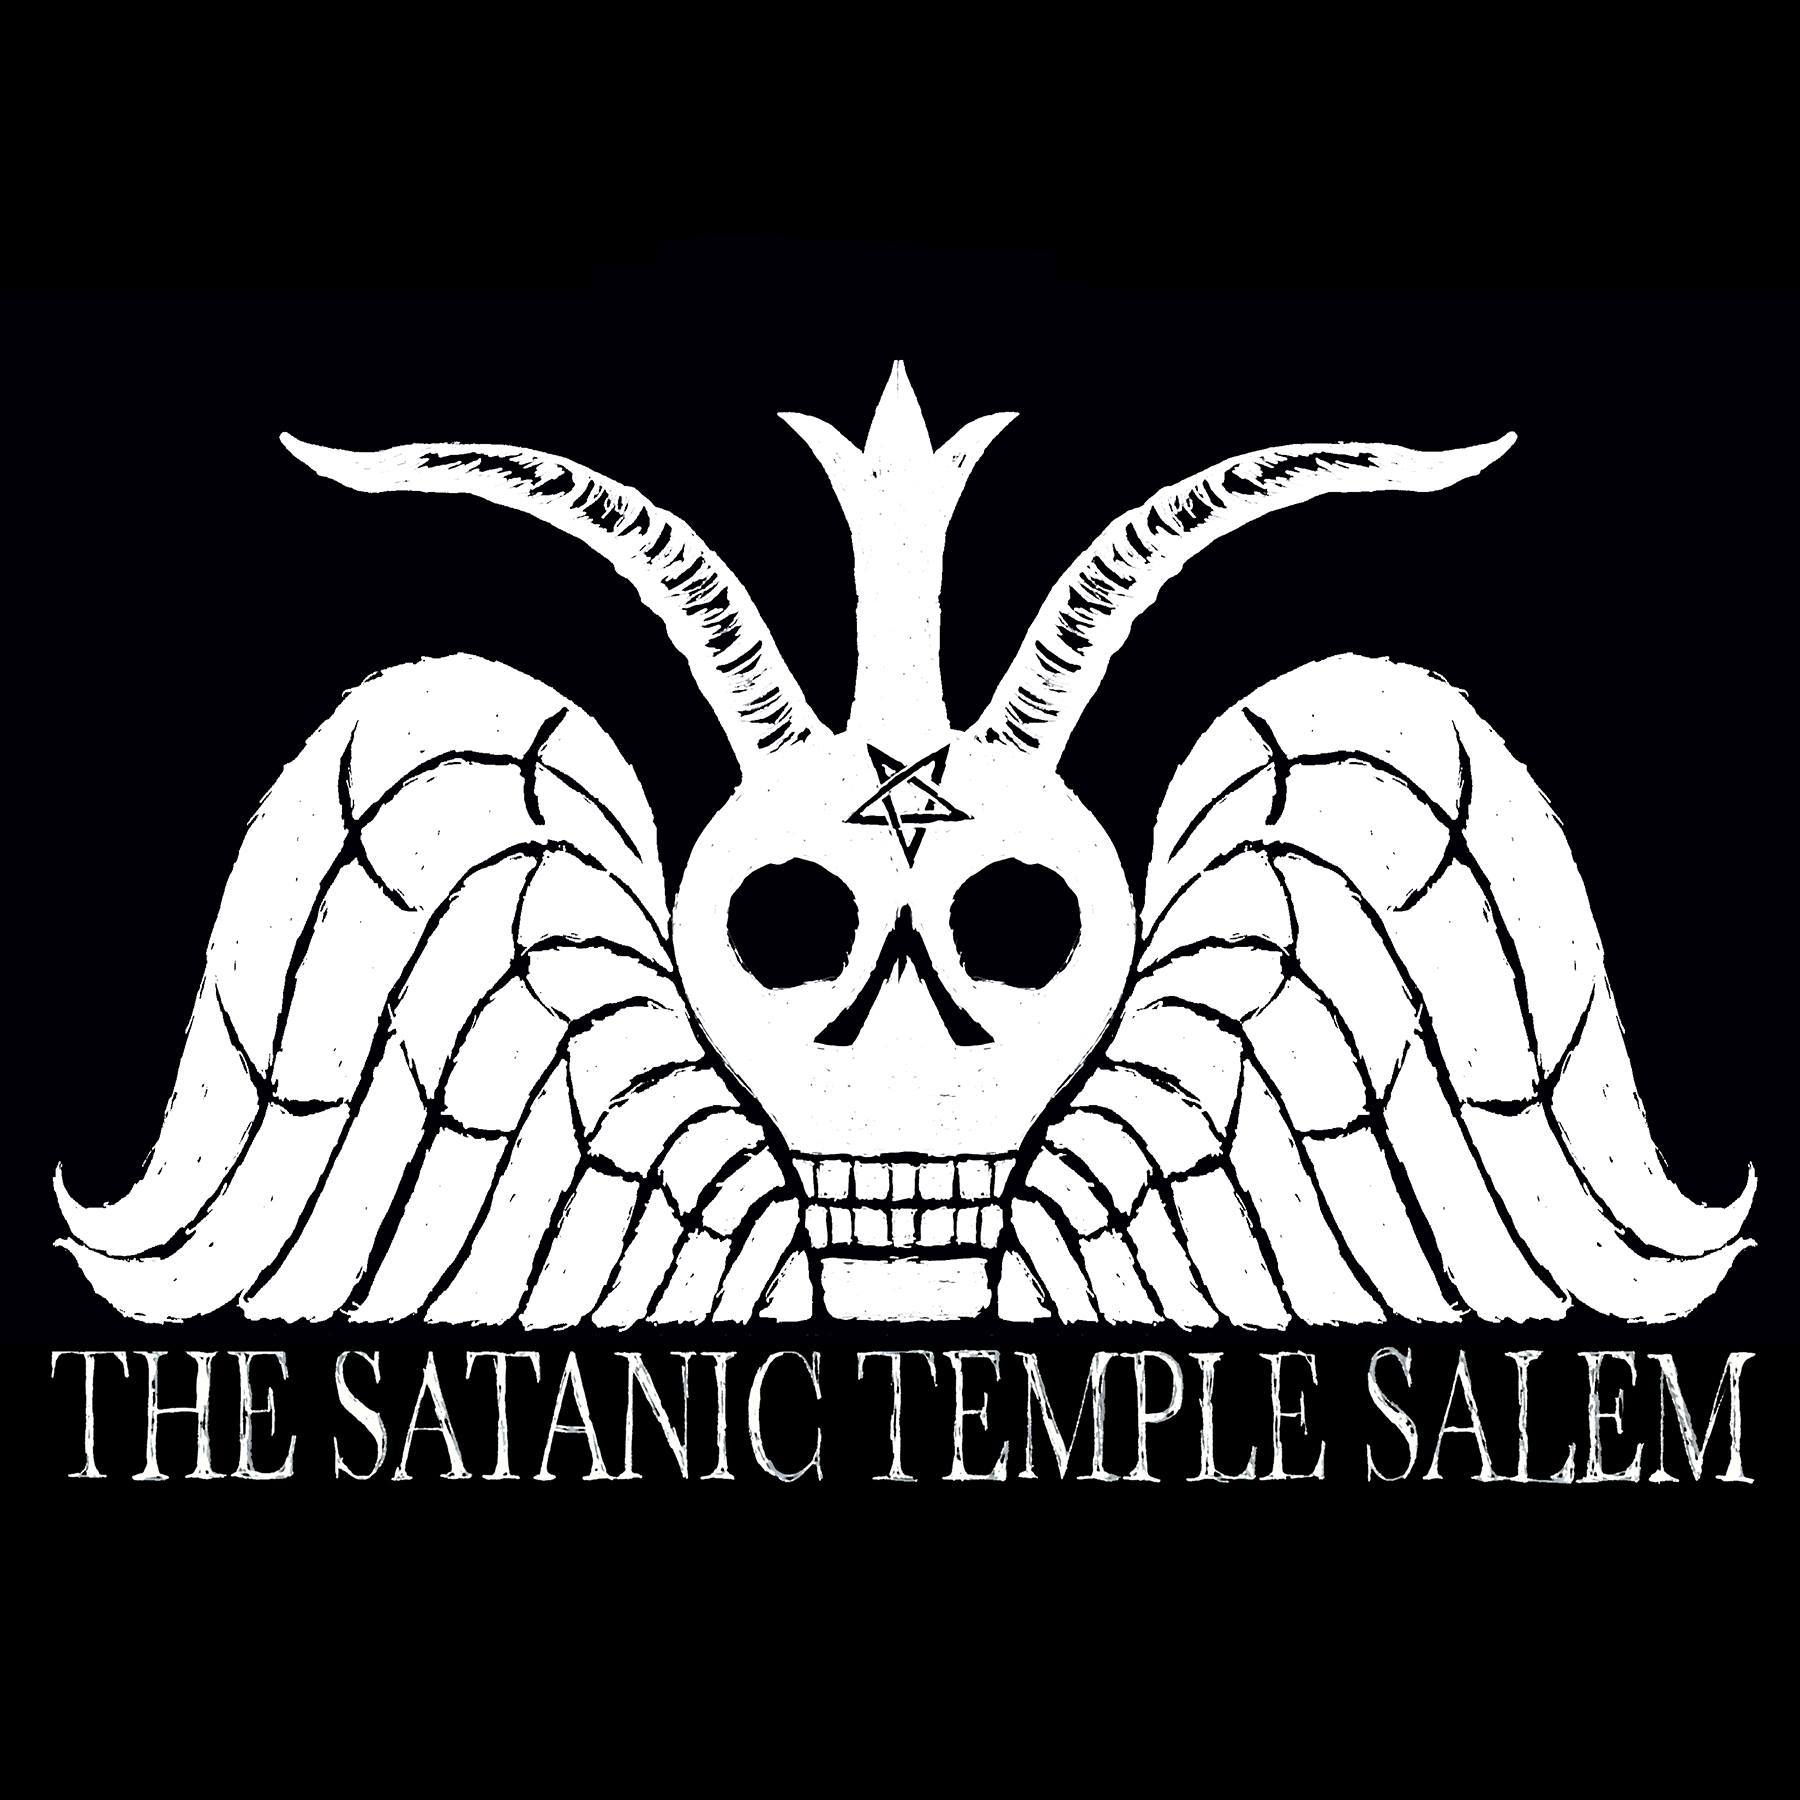 the satanic temple salem logo.